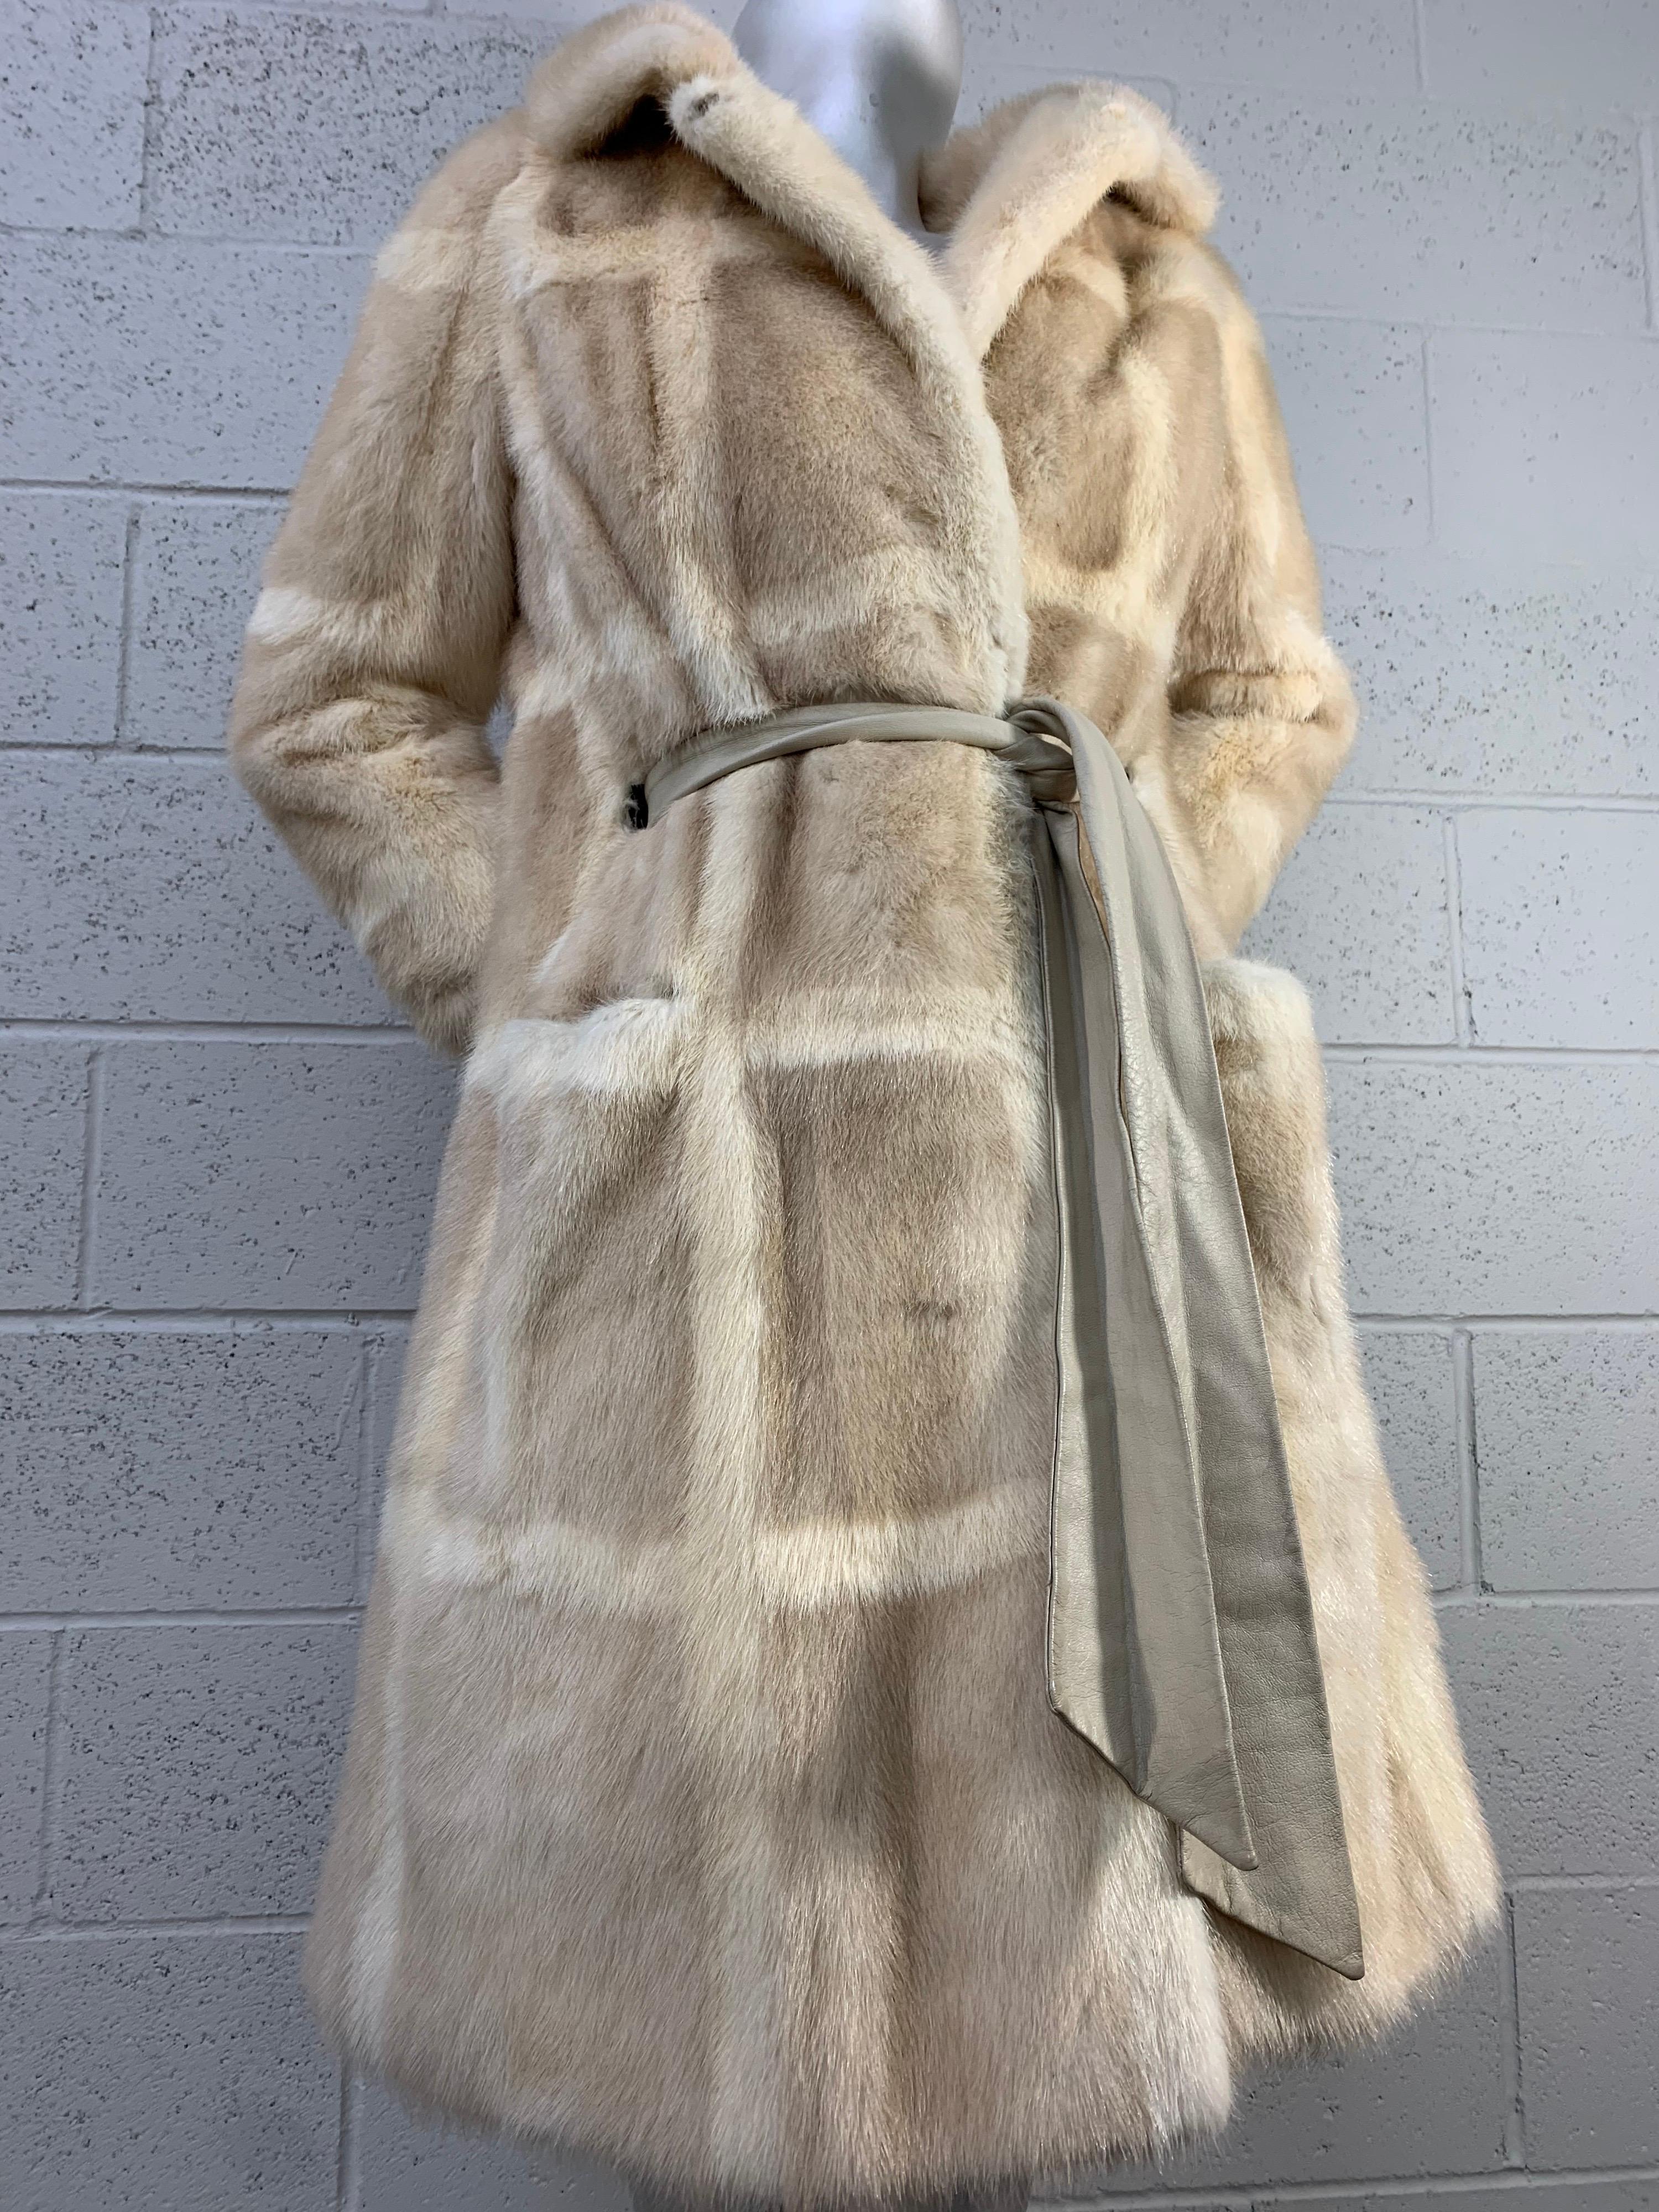 A beautiful 1960s Mod Neiman Marcus mink coat: Window pane inset design in blonde and cream fur. Beautiful graphic taffeta lining!  Original leather sash belt included. Size 6-8. 